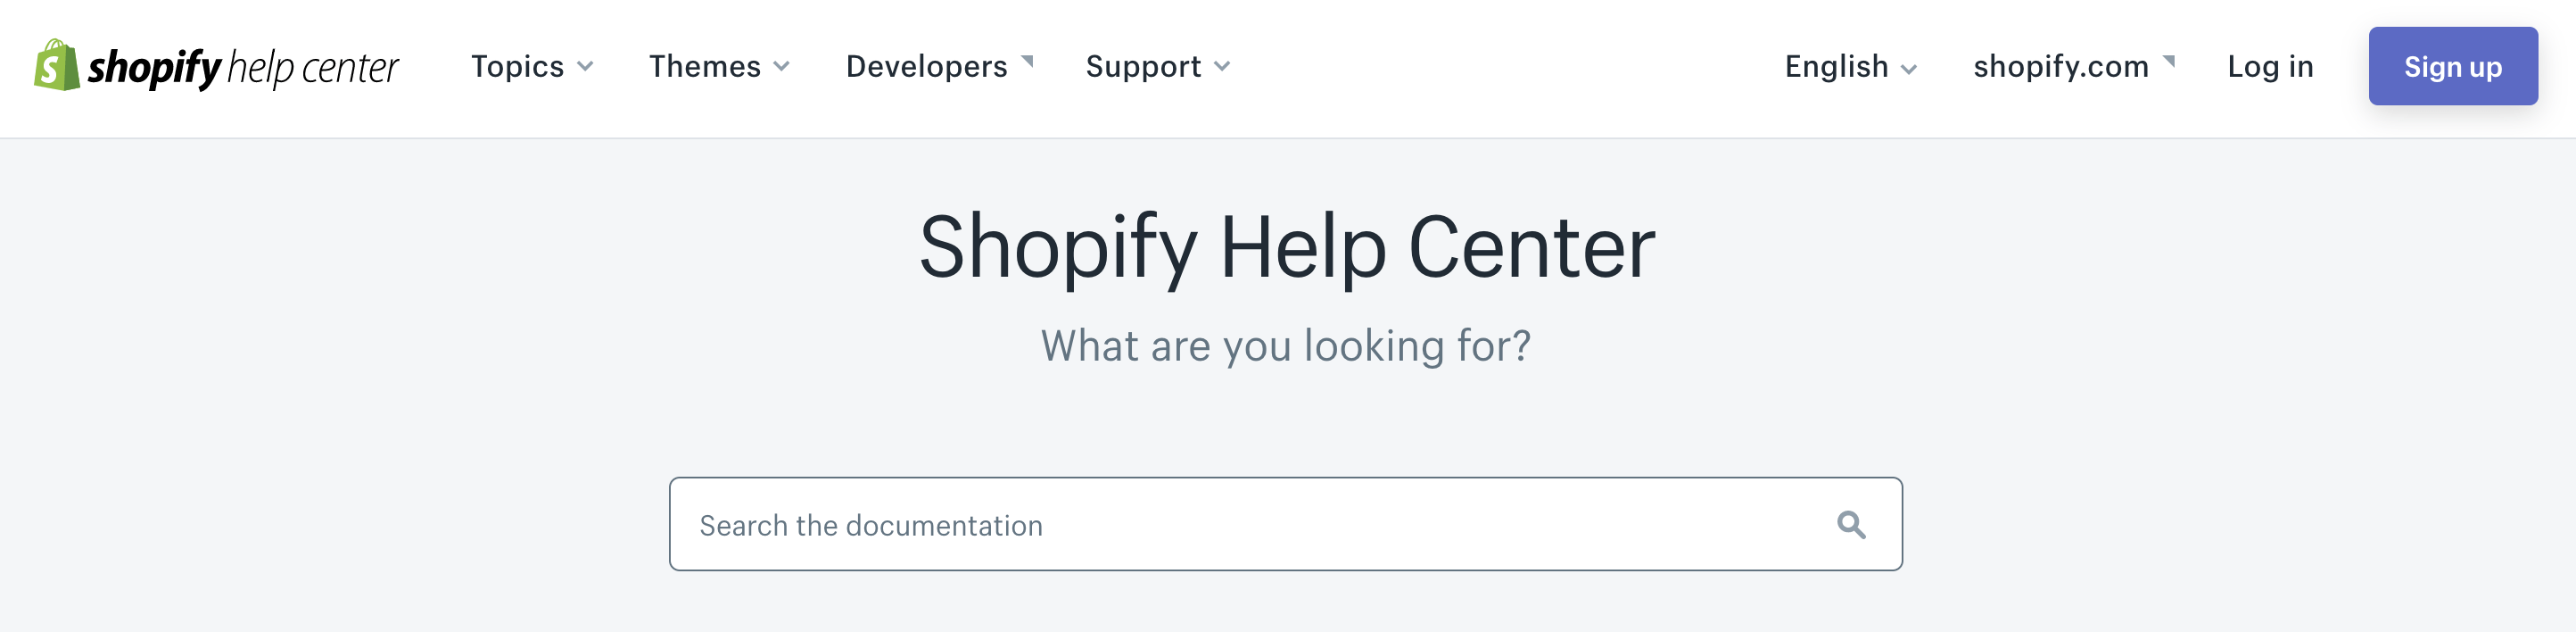 shopify help